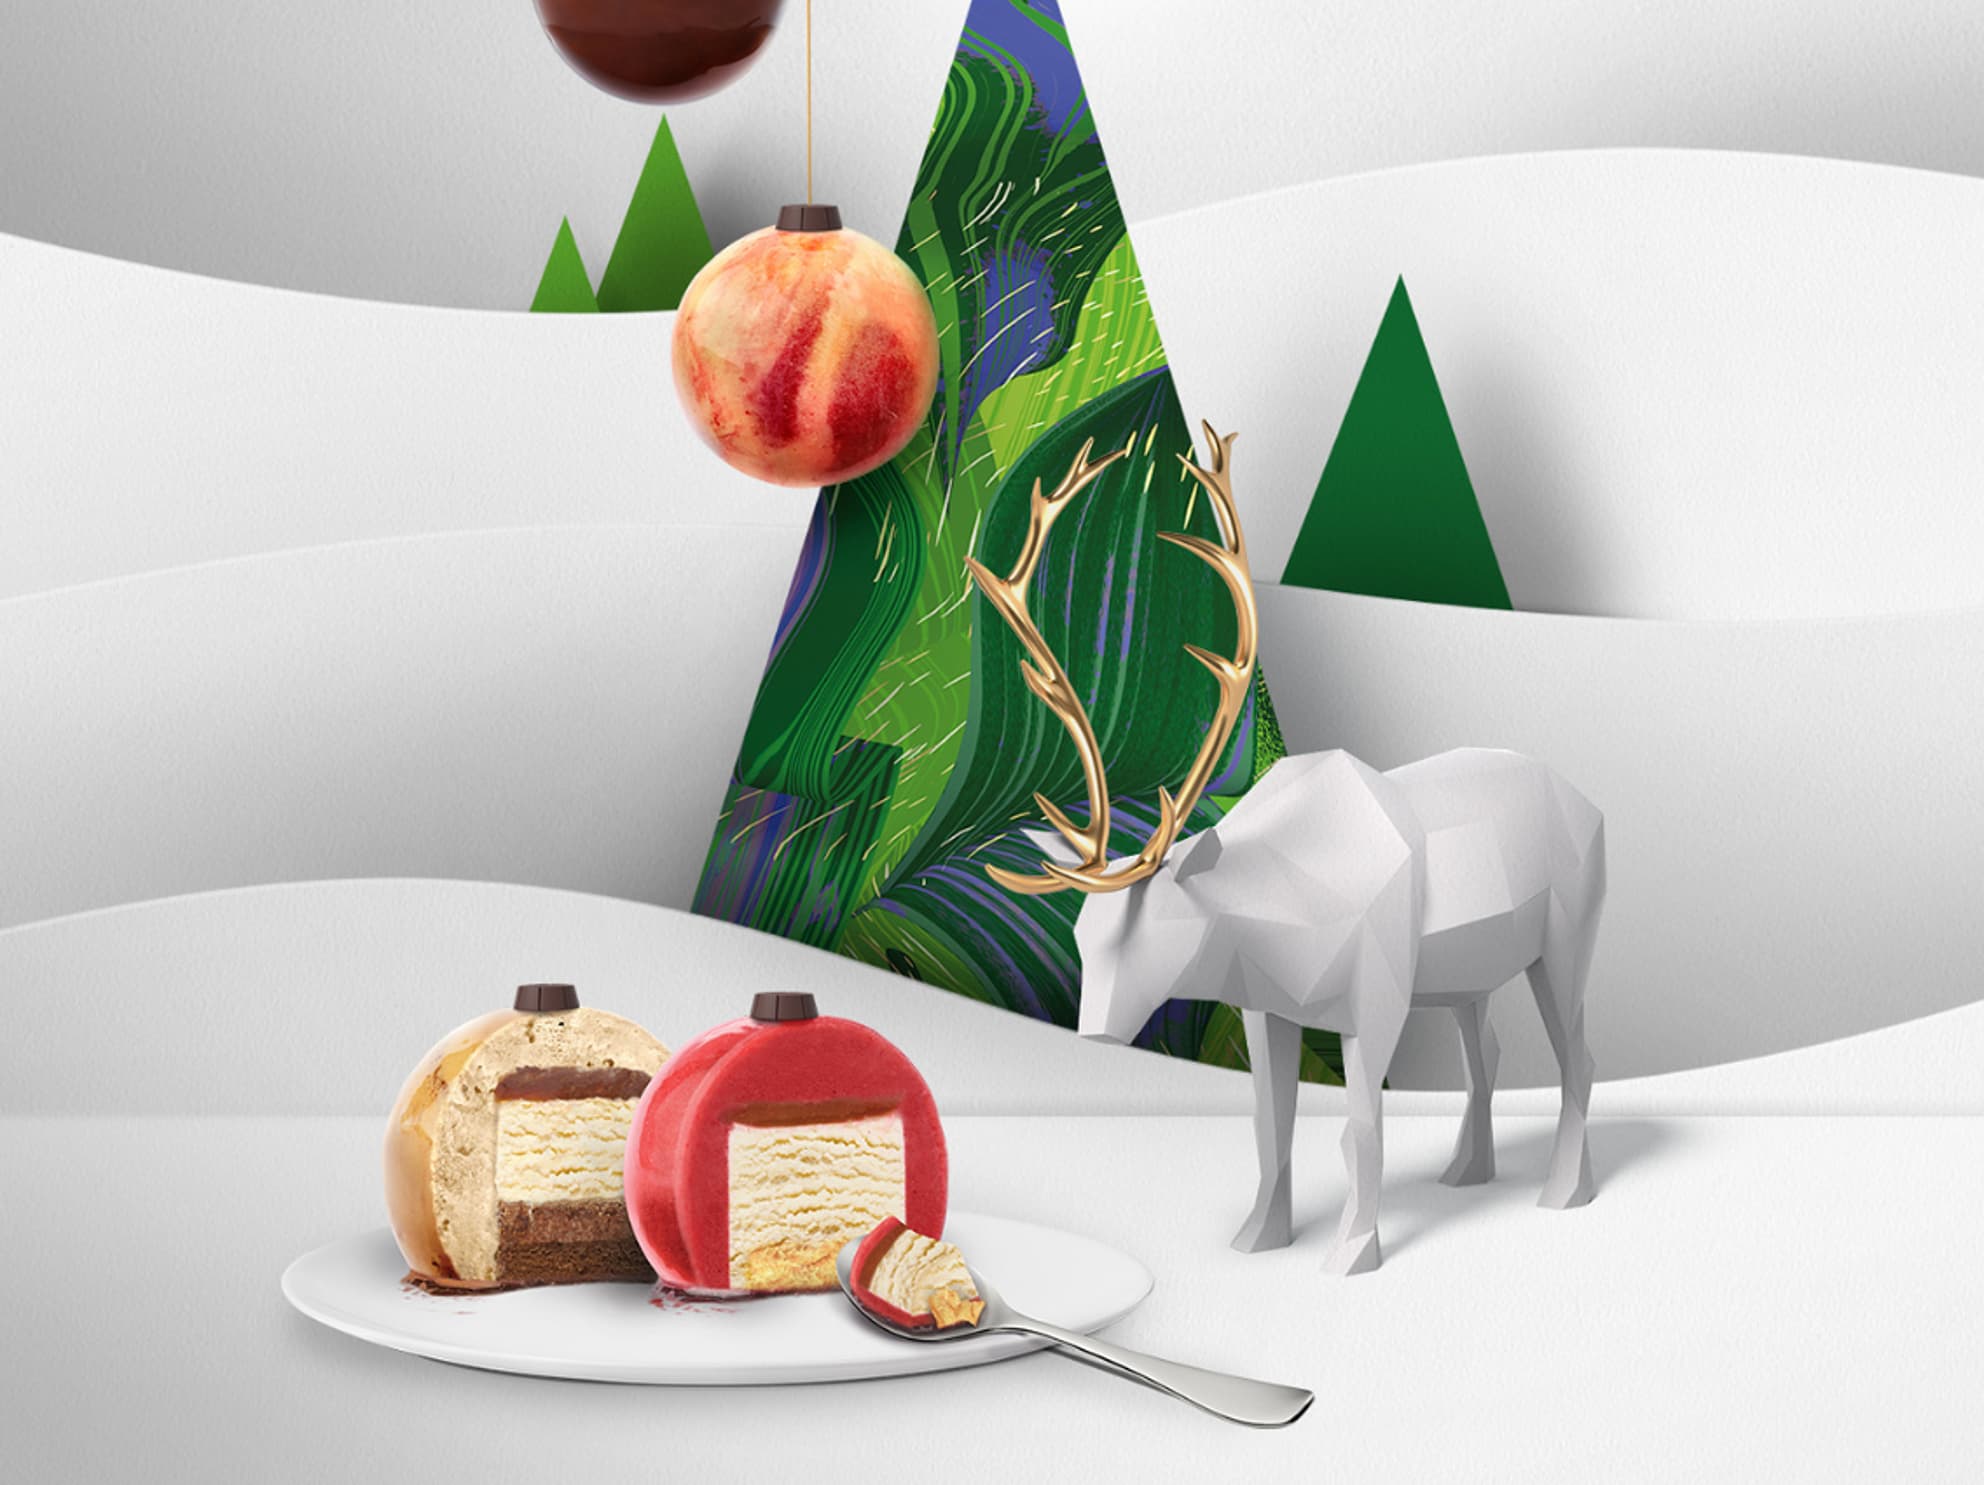 Haagen-Dazs festive charms with deer